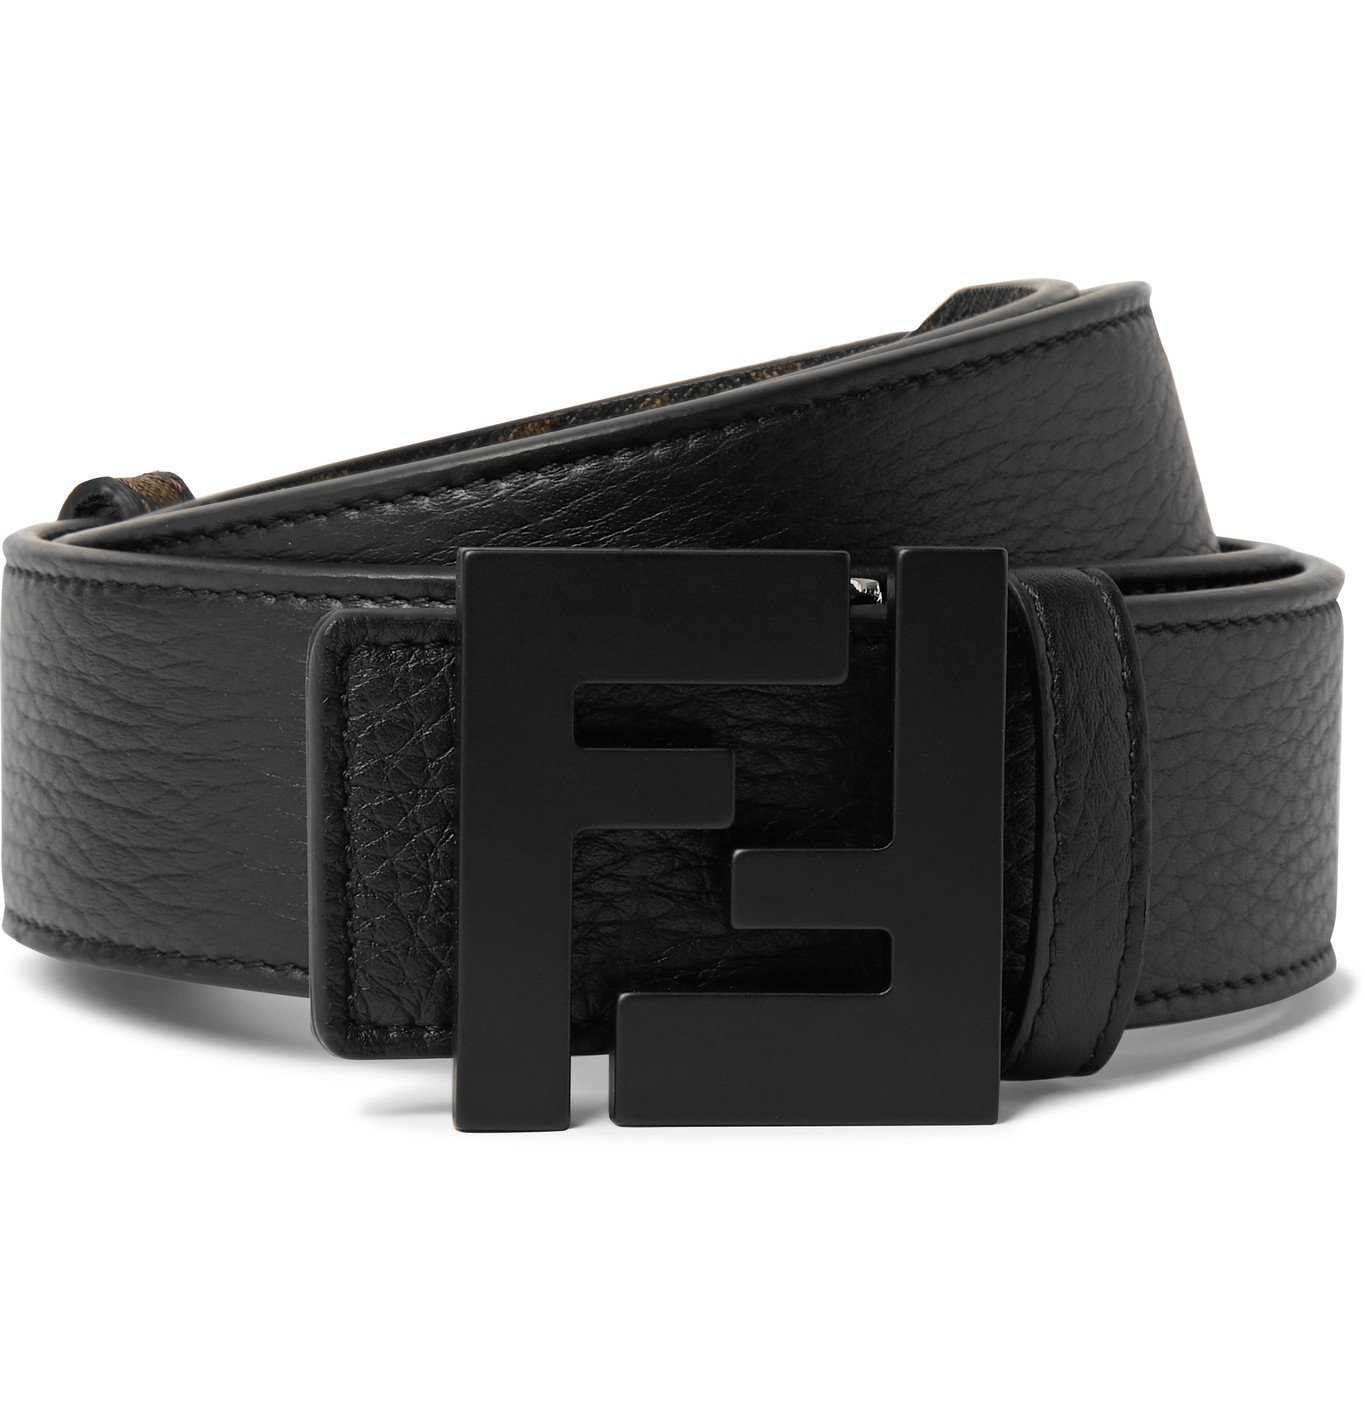 black and white fendi belt